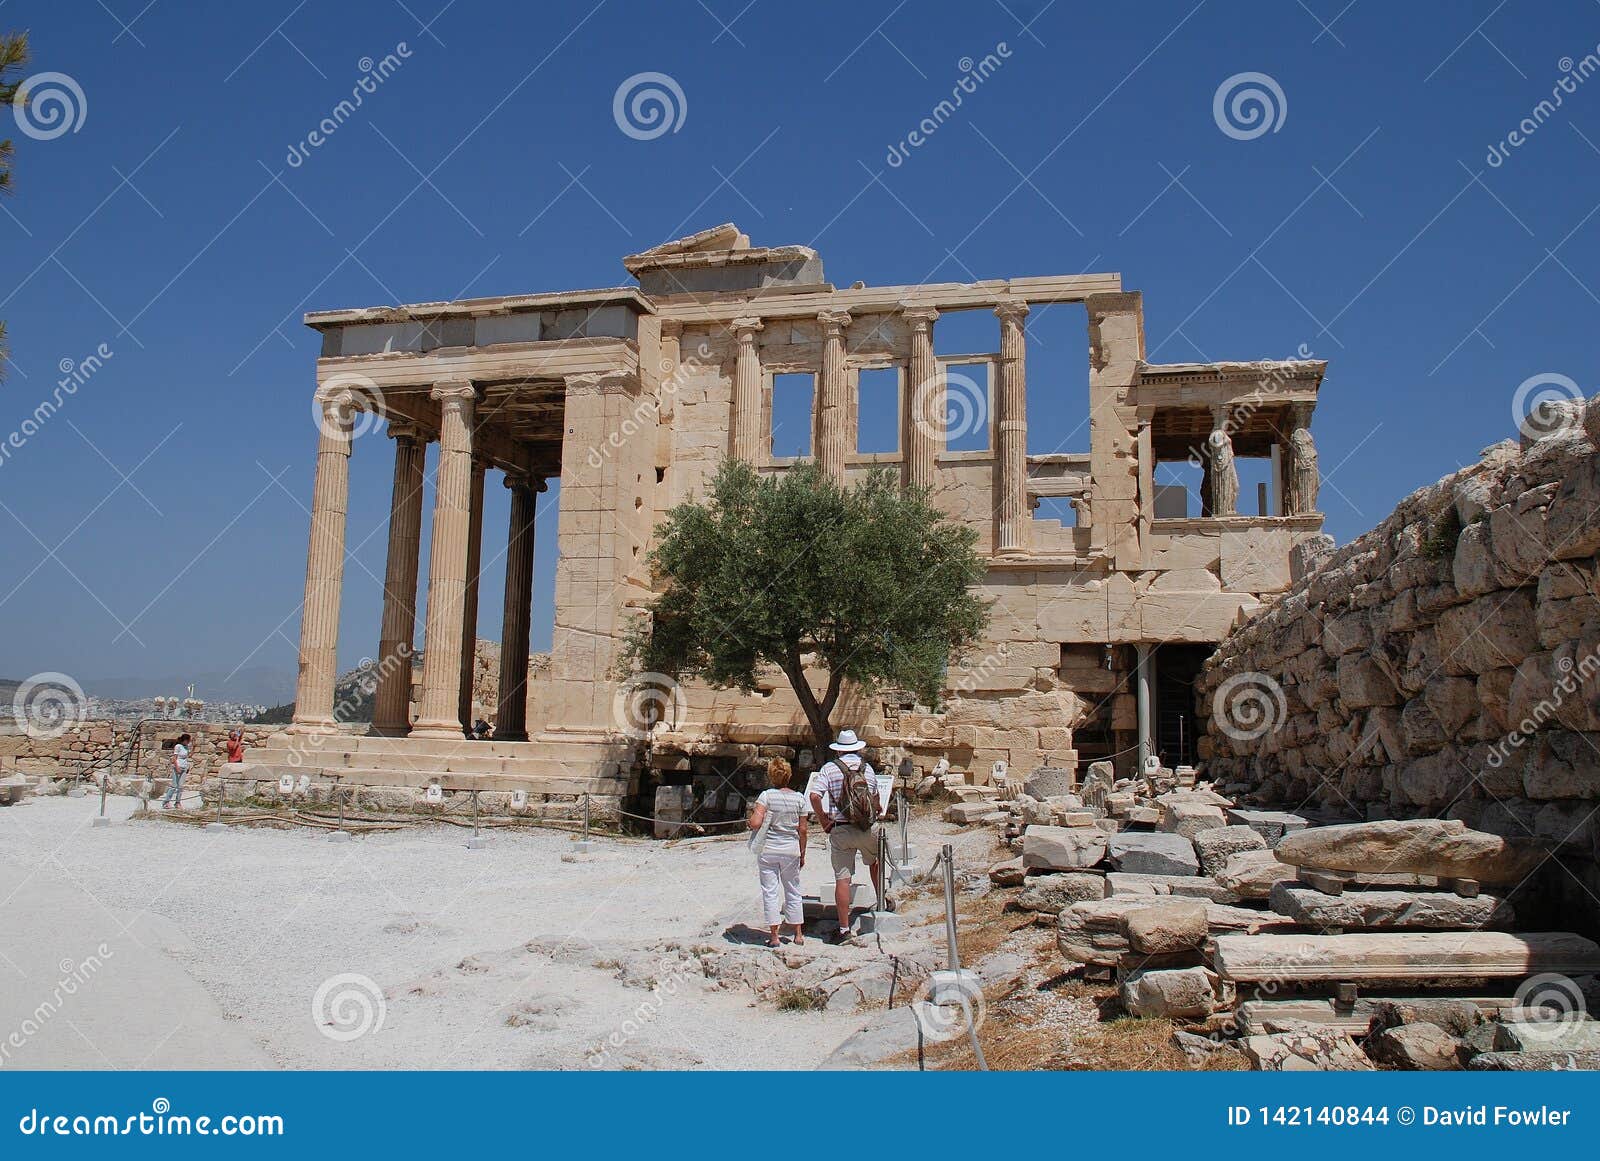 Sites athens greece in tourist Tourist Places